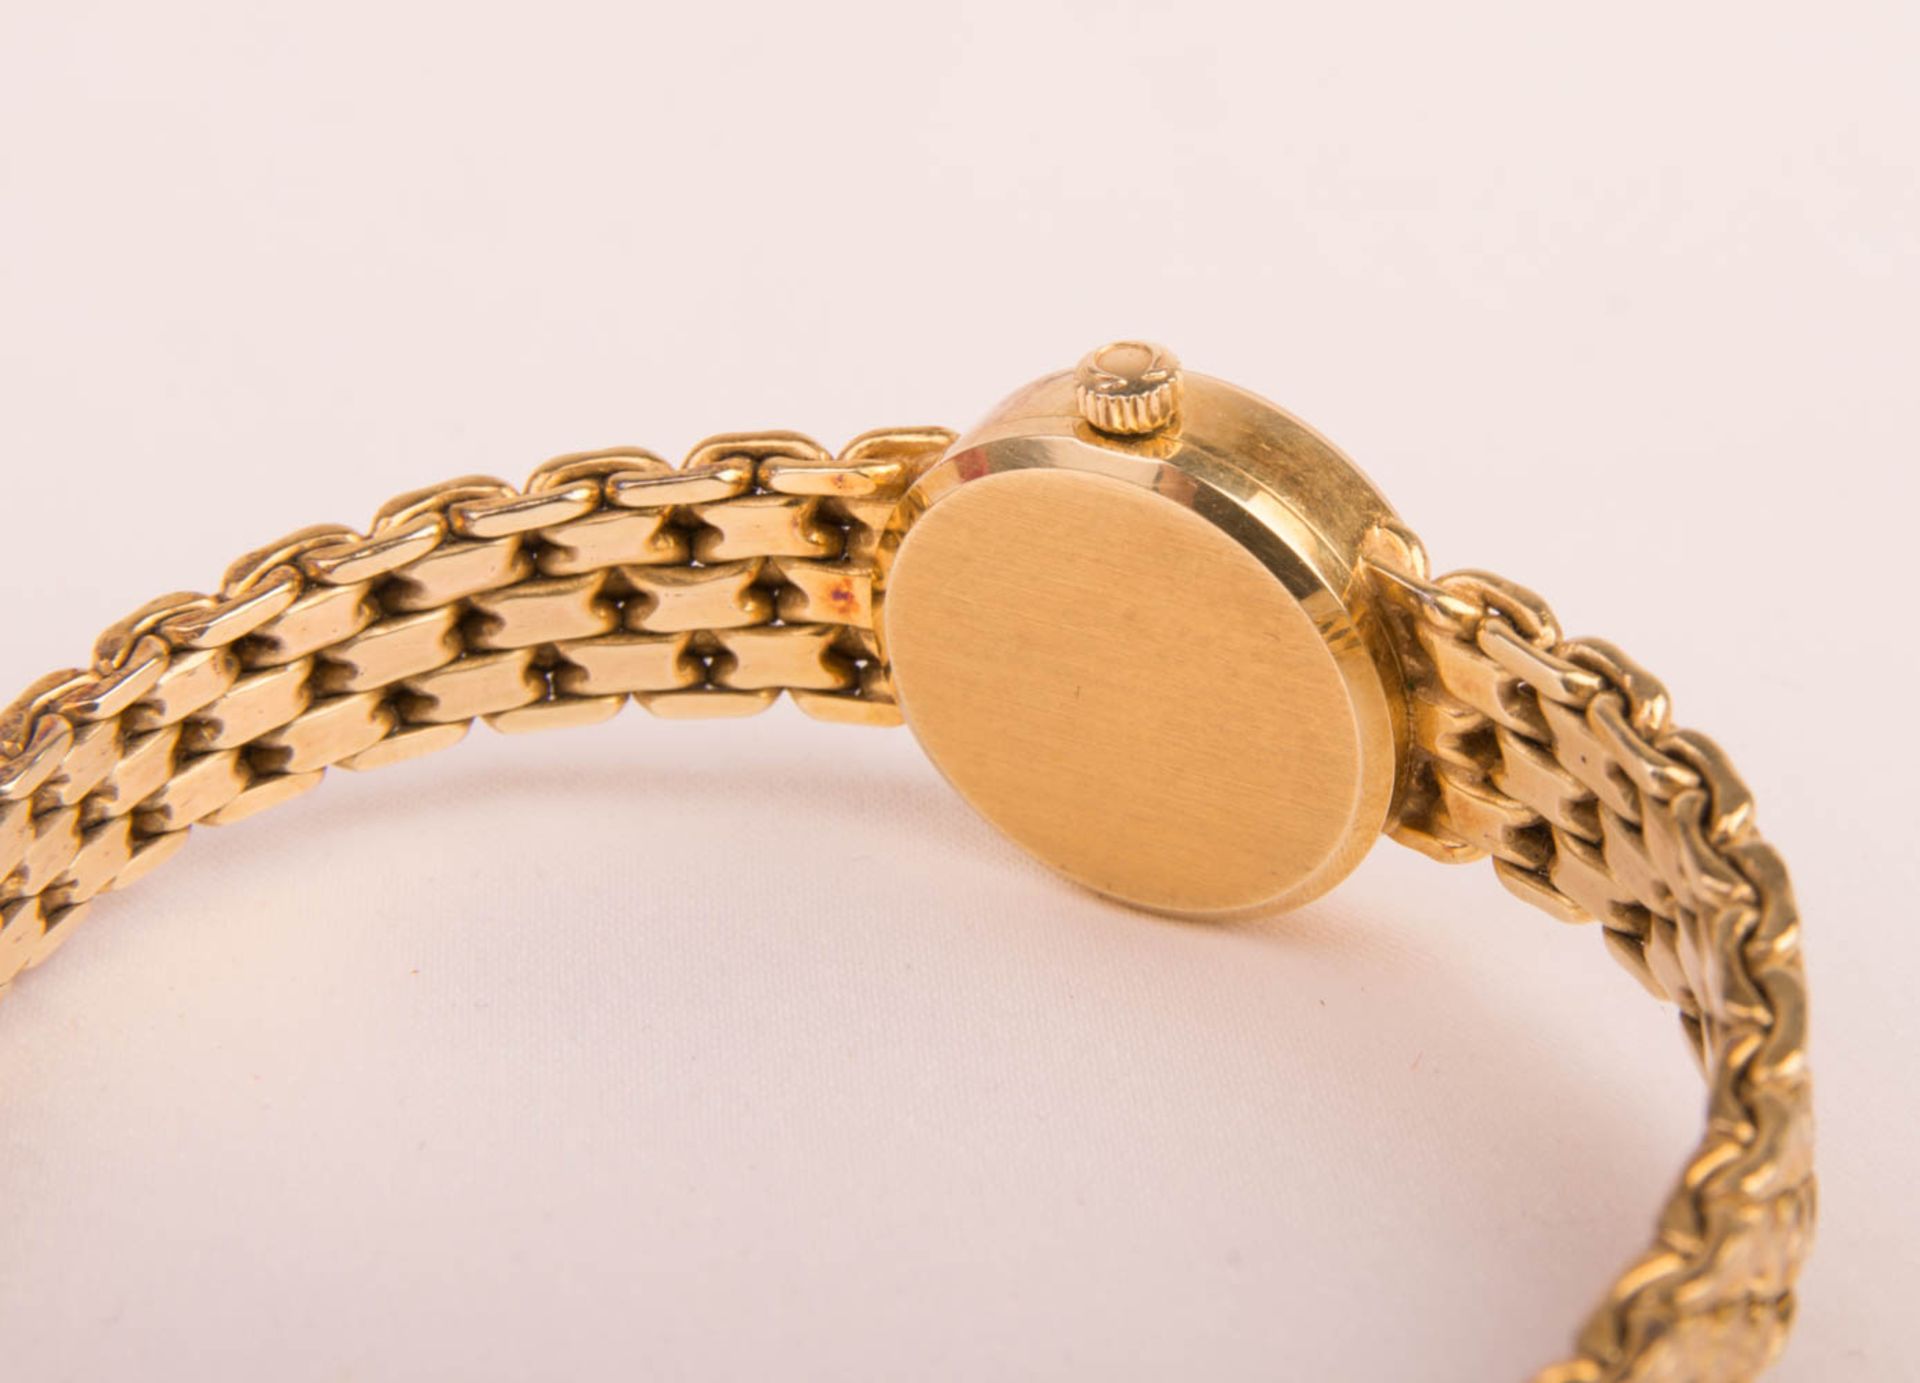 Omega ladies wrist watch, 585 yellow gold. - Image 6 of 8